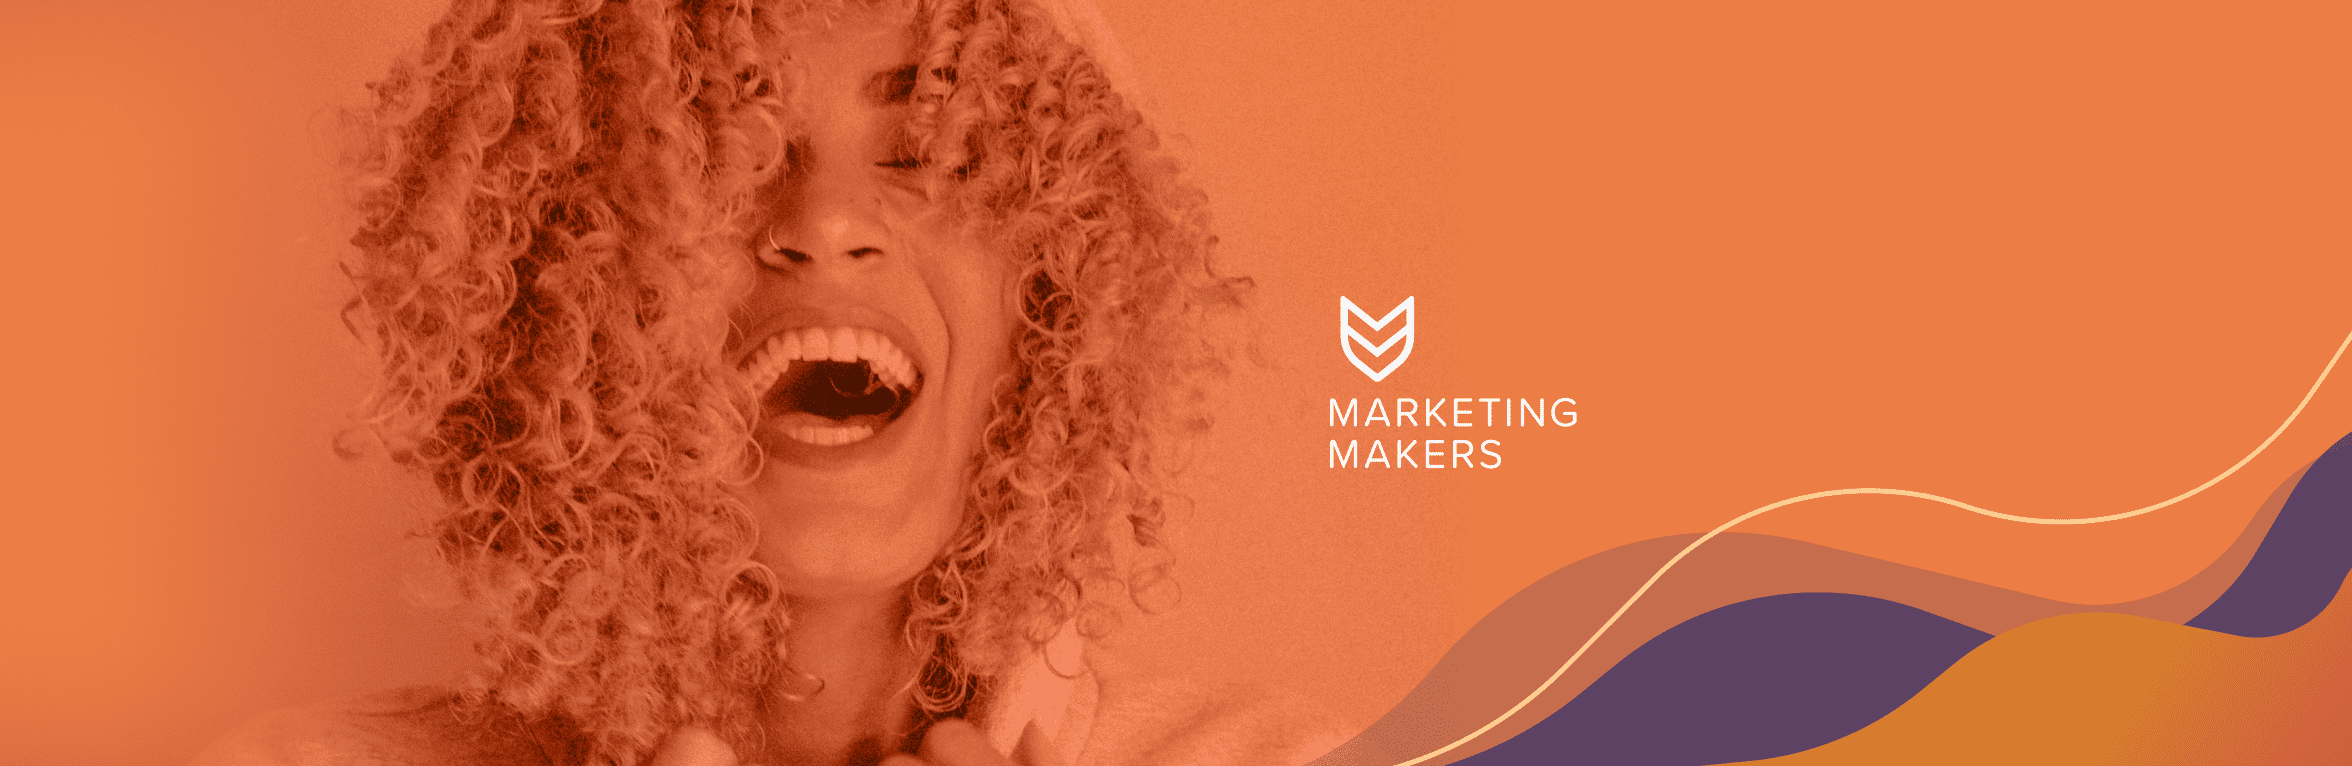 Marketing Makers webdesign - Freelance Designer and Developer Amsterdam